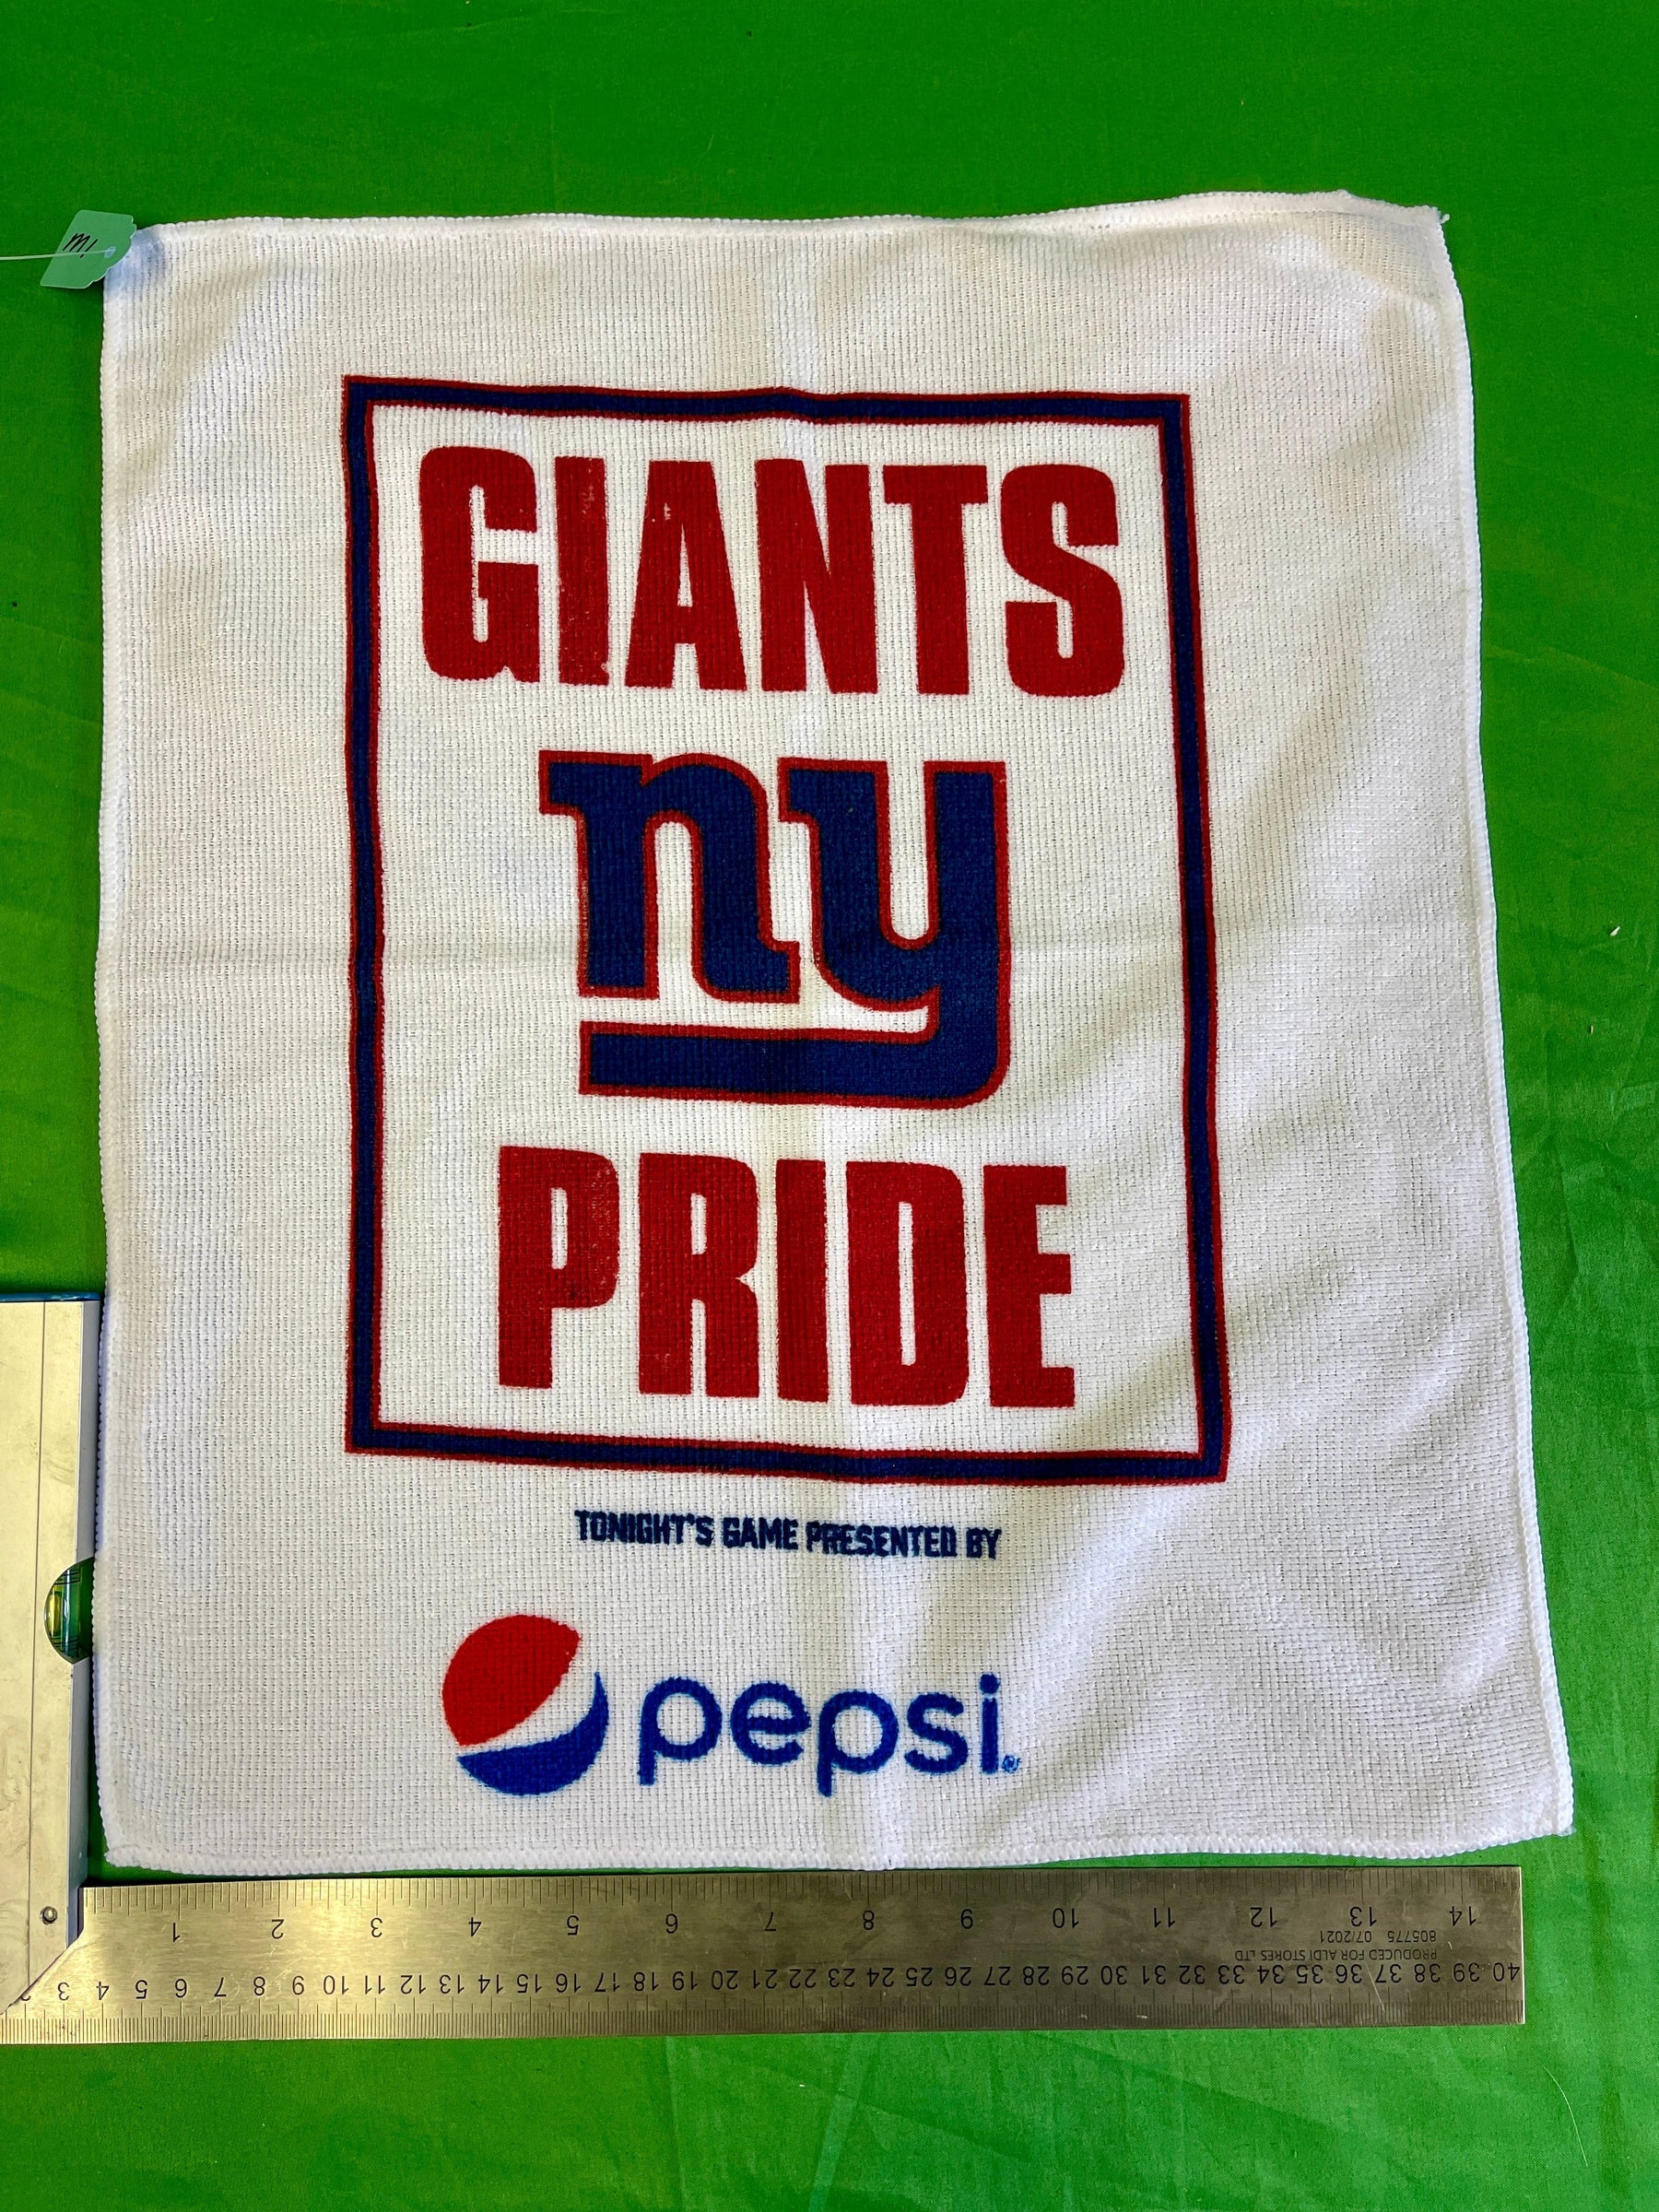 NFL New York Giants Pepsi Fan Pride Rally Towel